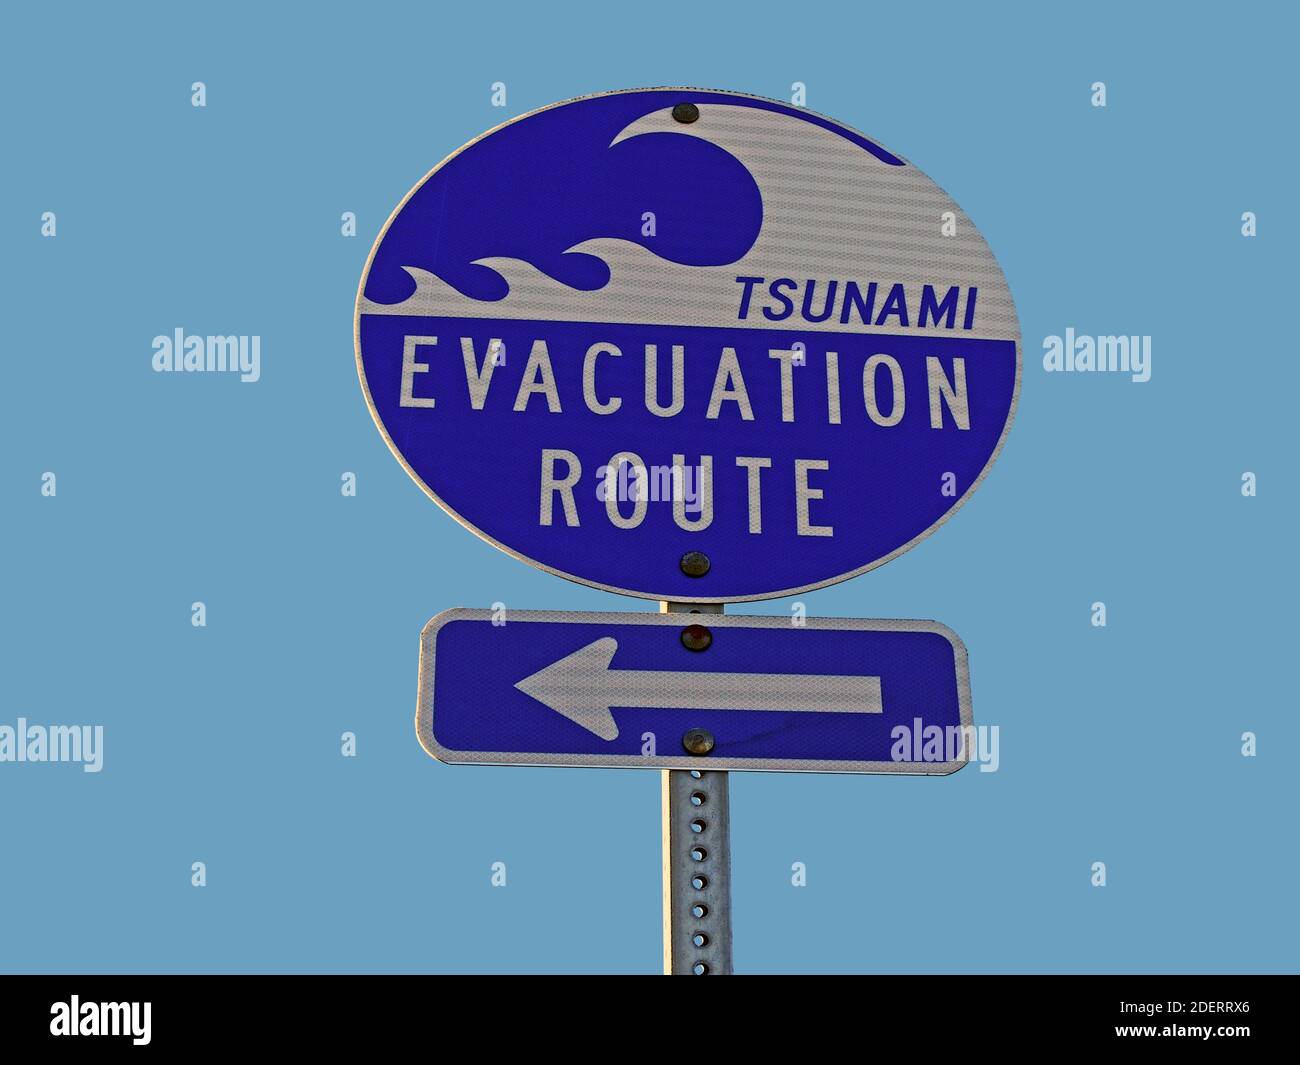 Tsunami Evacuation Route Schild und Pfeil. Stockfoto